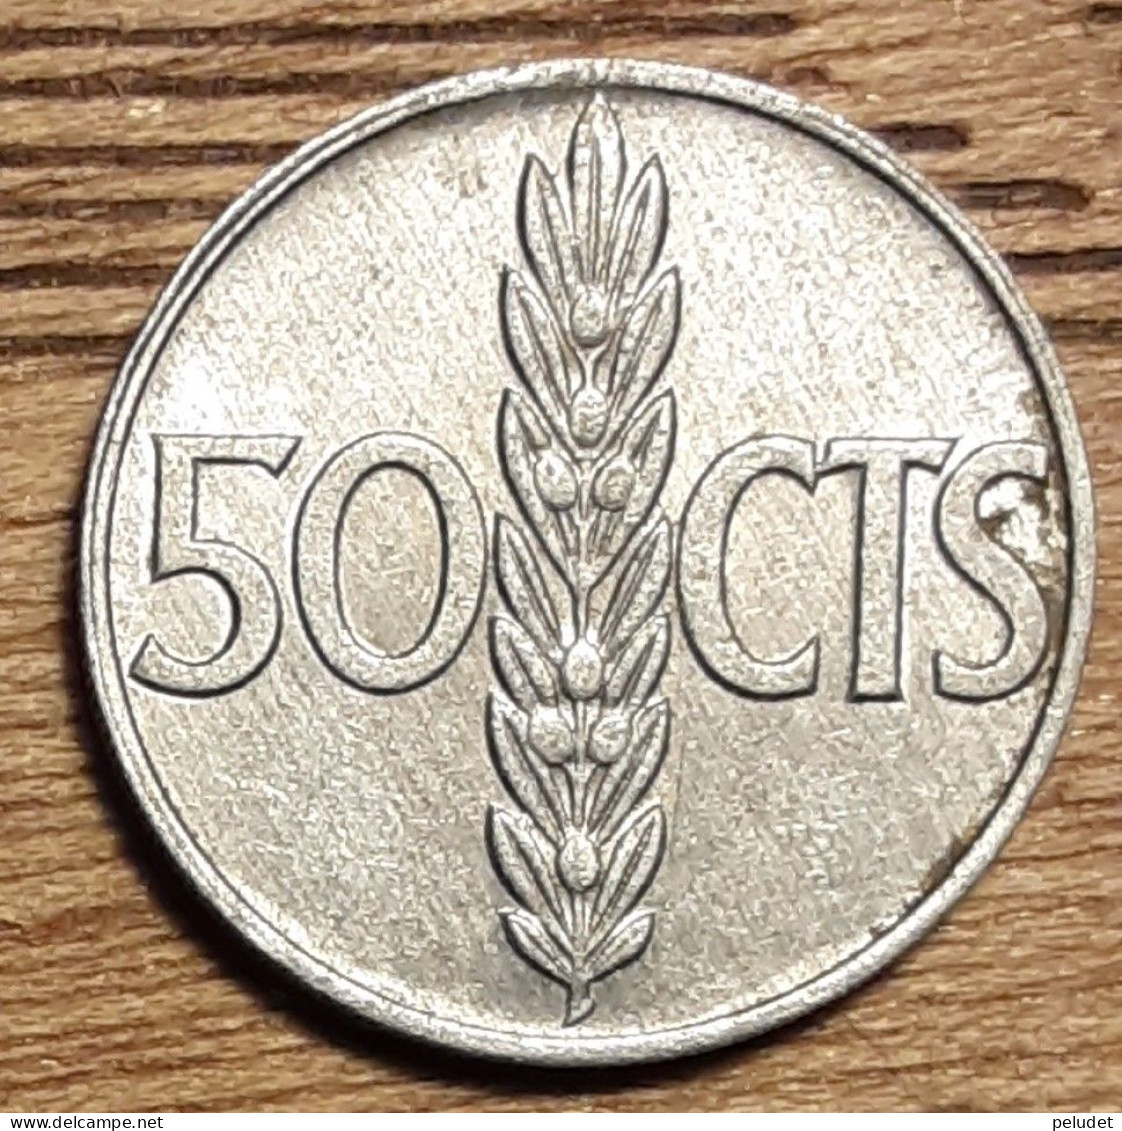 España Spain Espagne, 50 CTS CENTIMOS 1966 / 67* KM# 795 - 50 Centimos